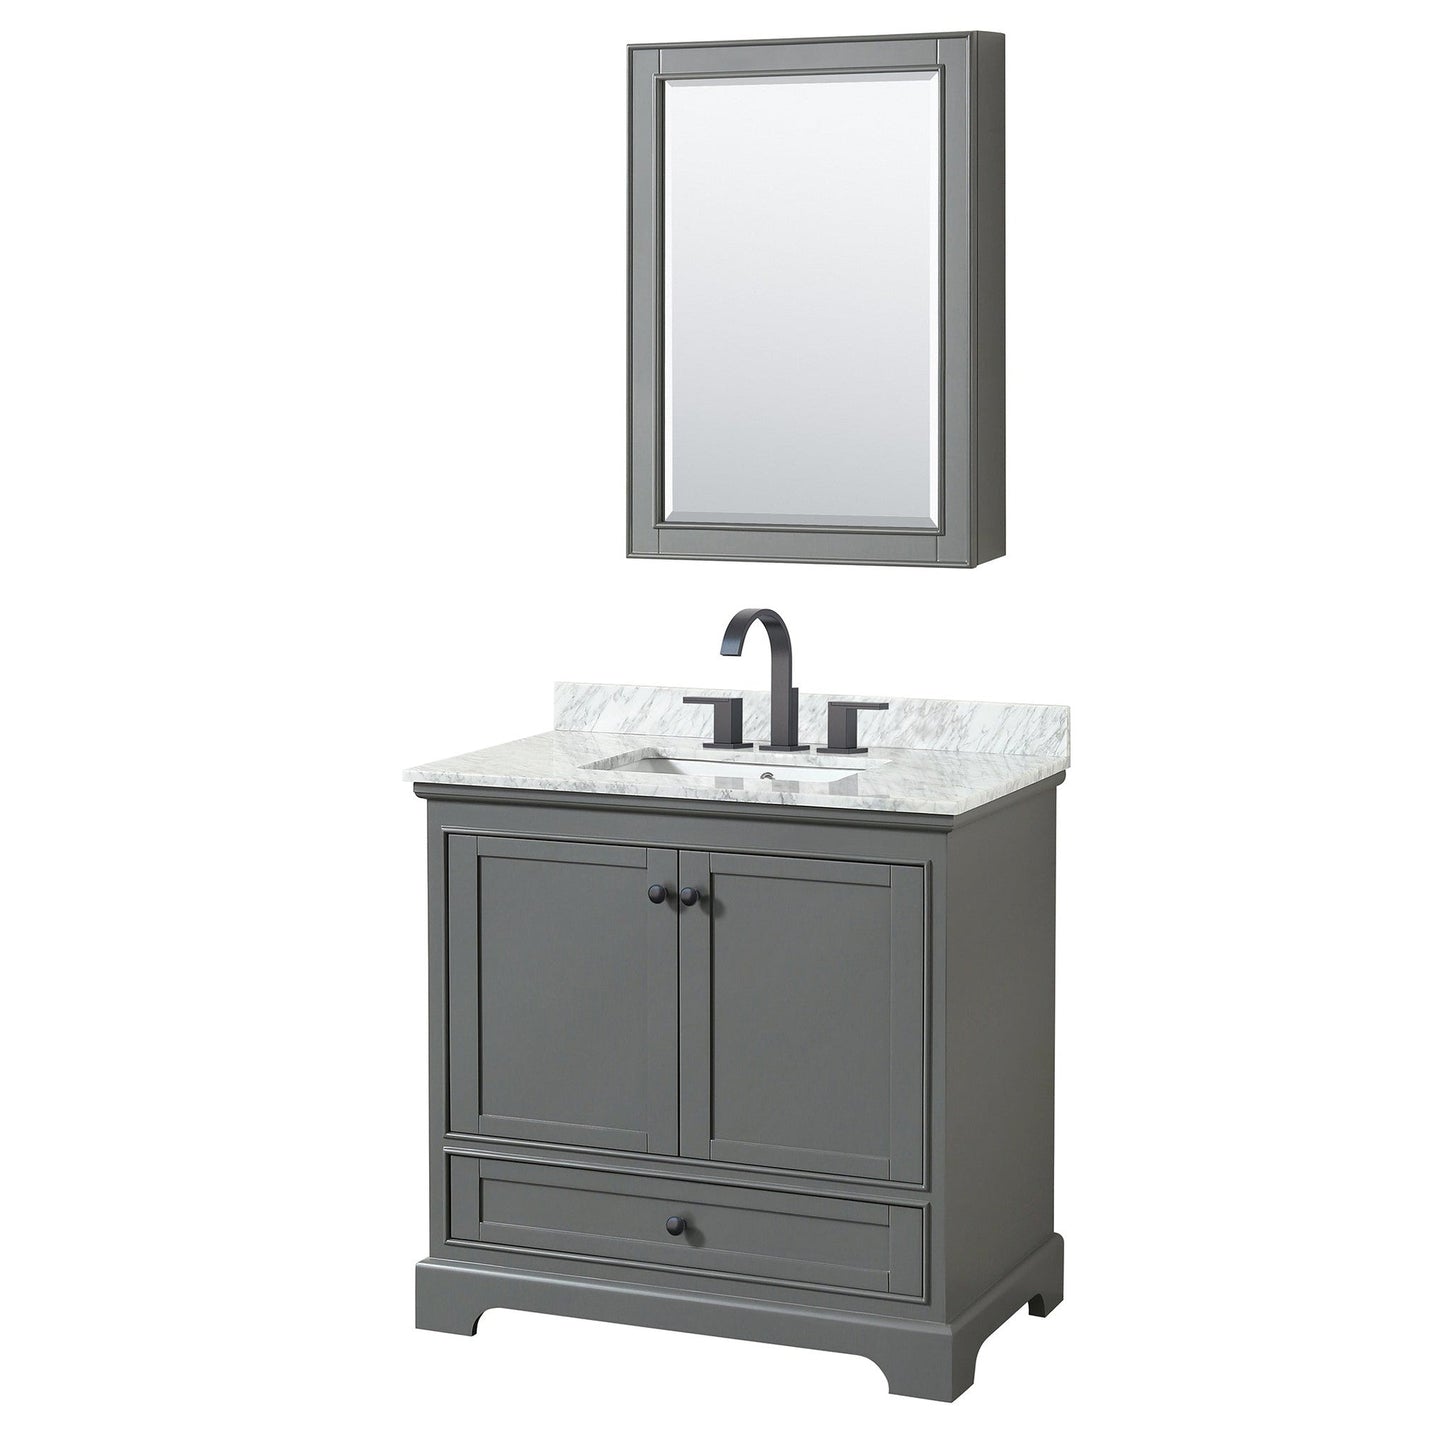 Deborah 36" Single Bathroom Vanity in Dark Gray, White Carrara Marble Countertop, Undermount Square Sink, Matte Black Trim, Medicine Cabinet